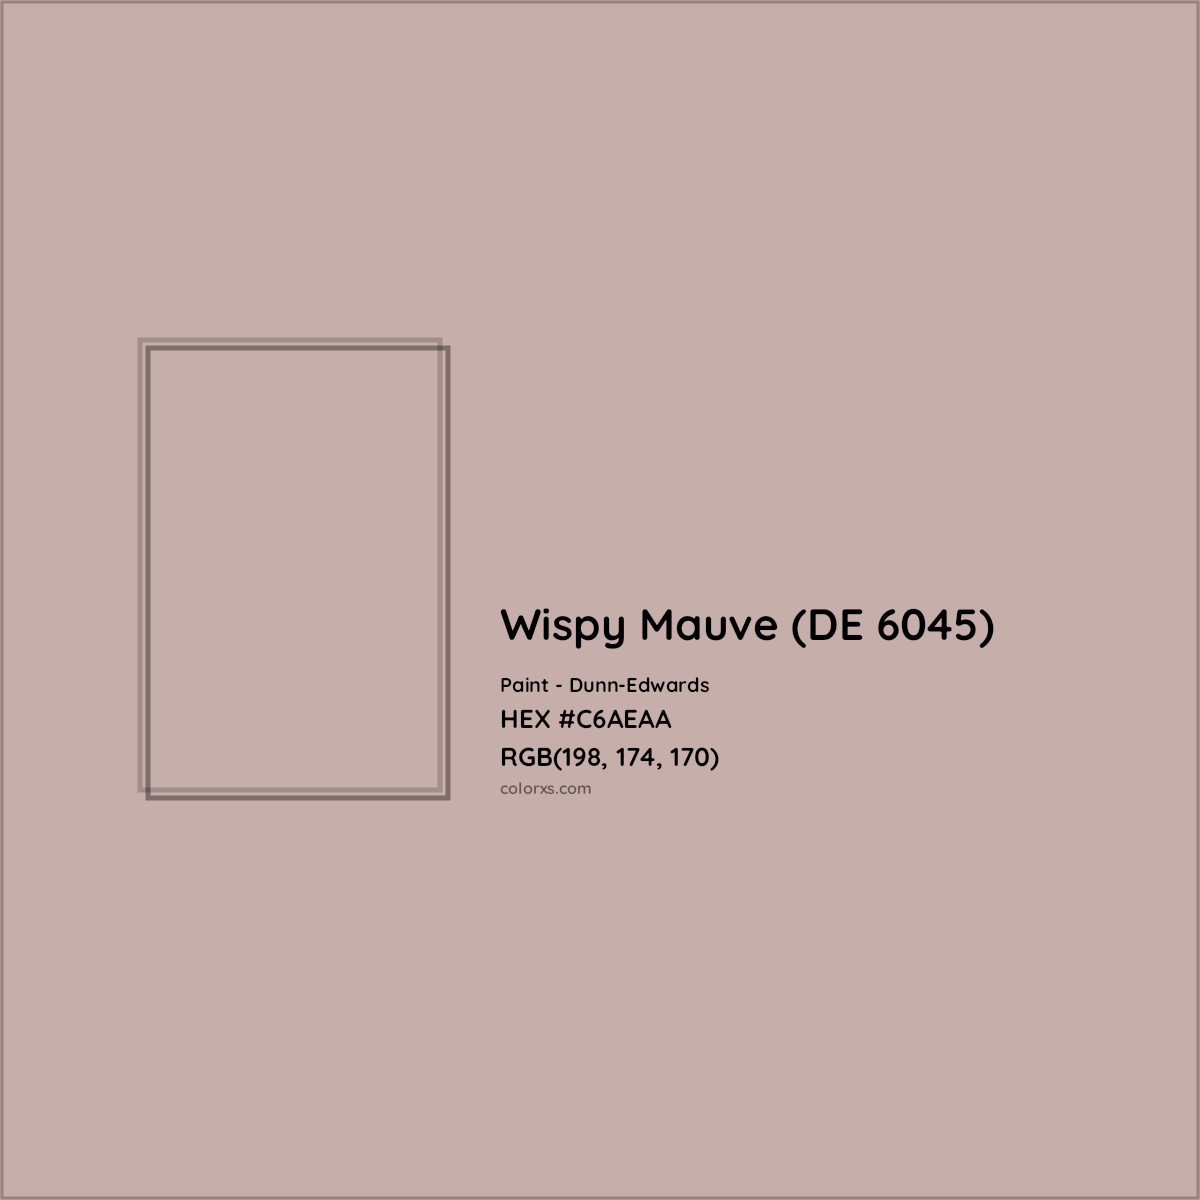 HEX #C6AEAA Wispy Mauve (DE 6045) Paint Dunn-Edwards - Color Code